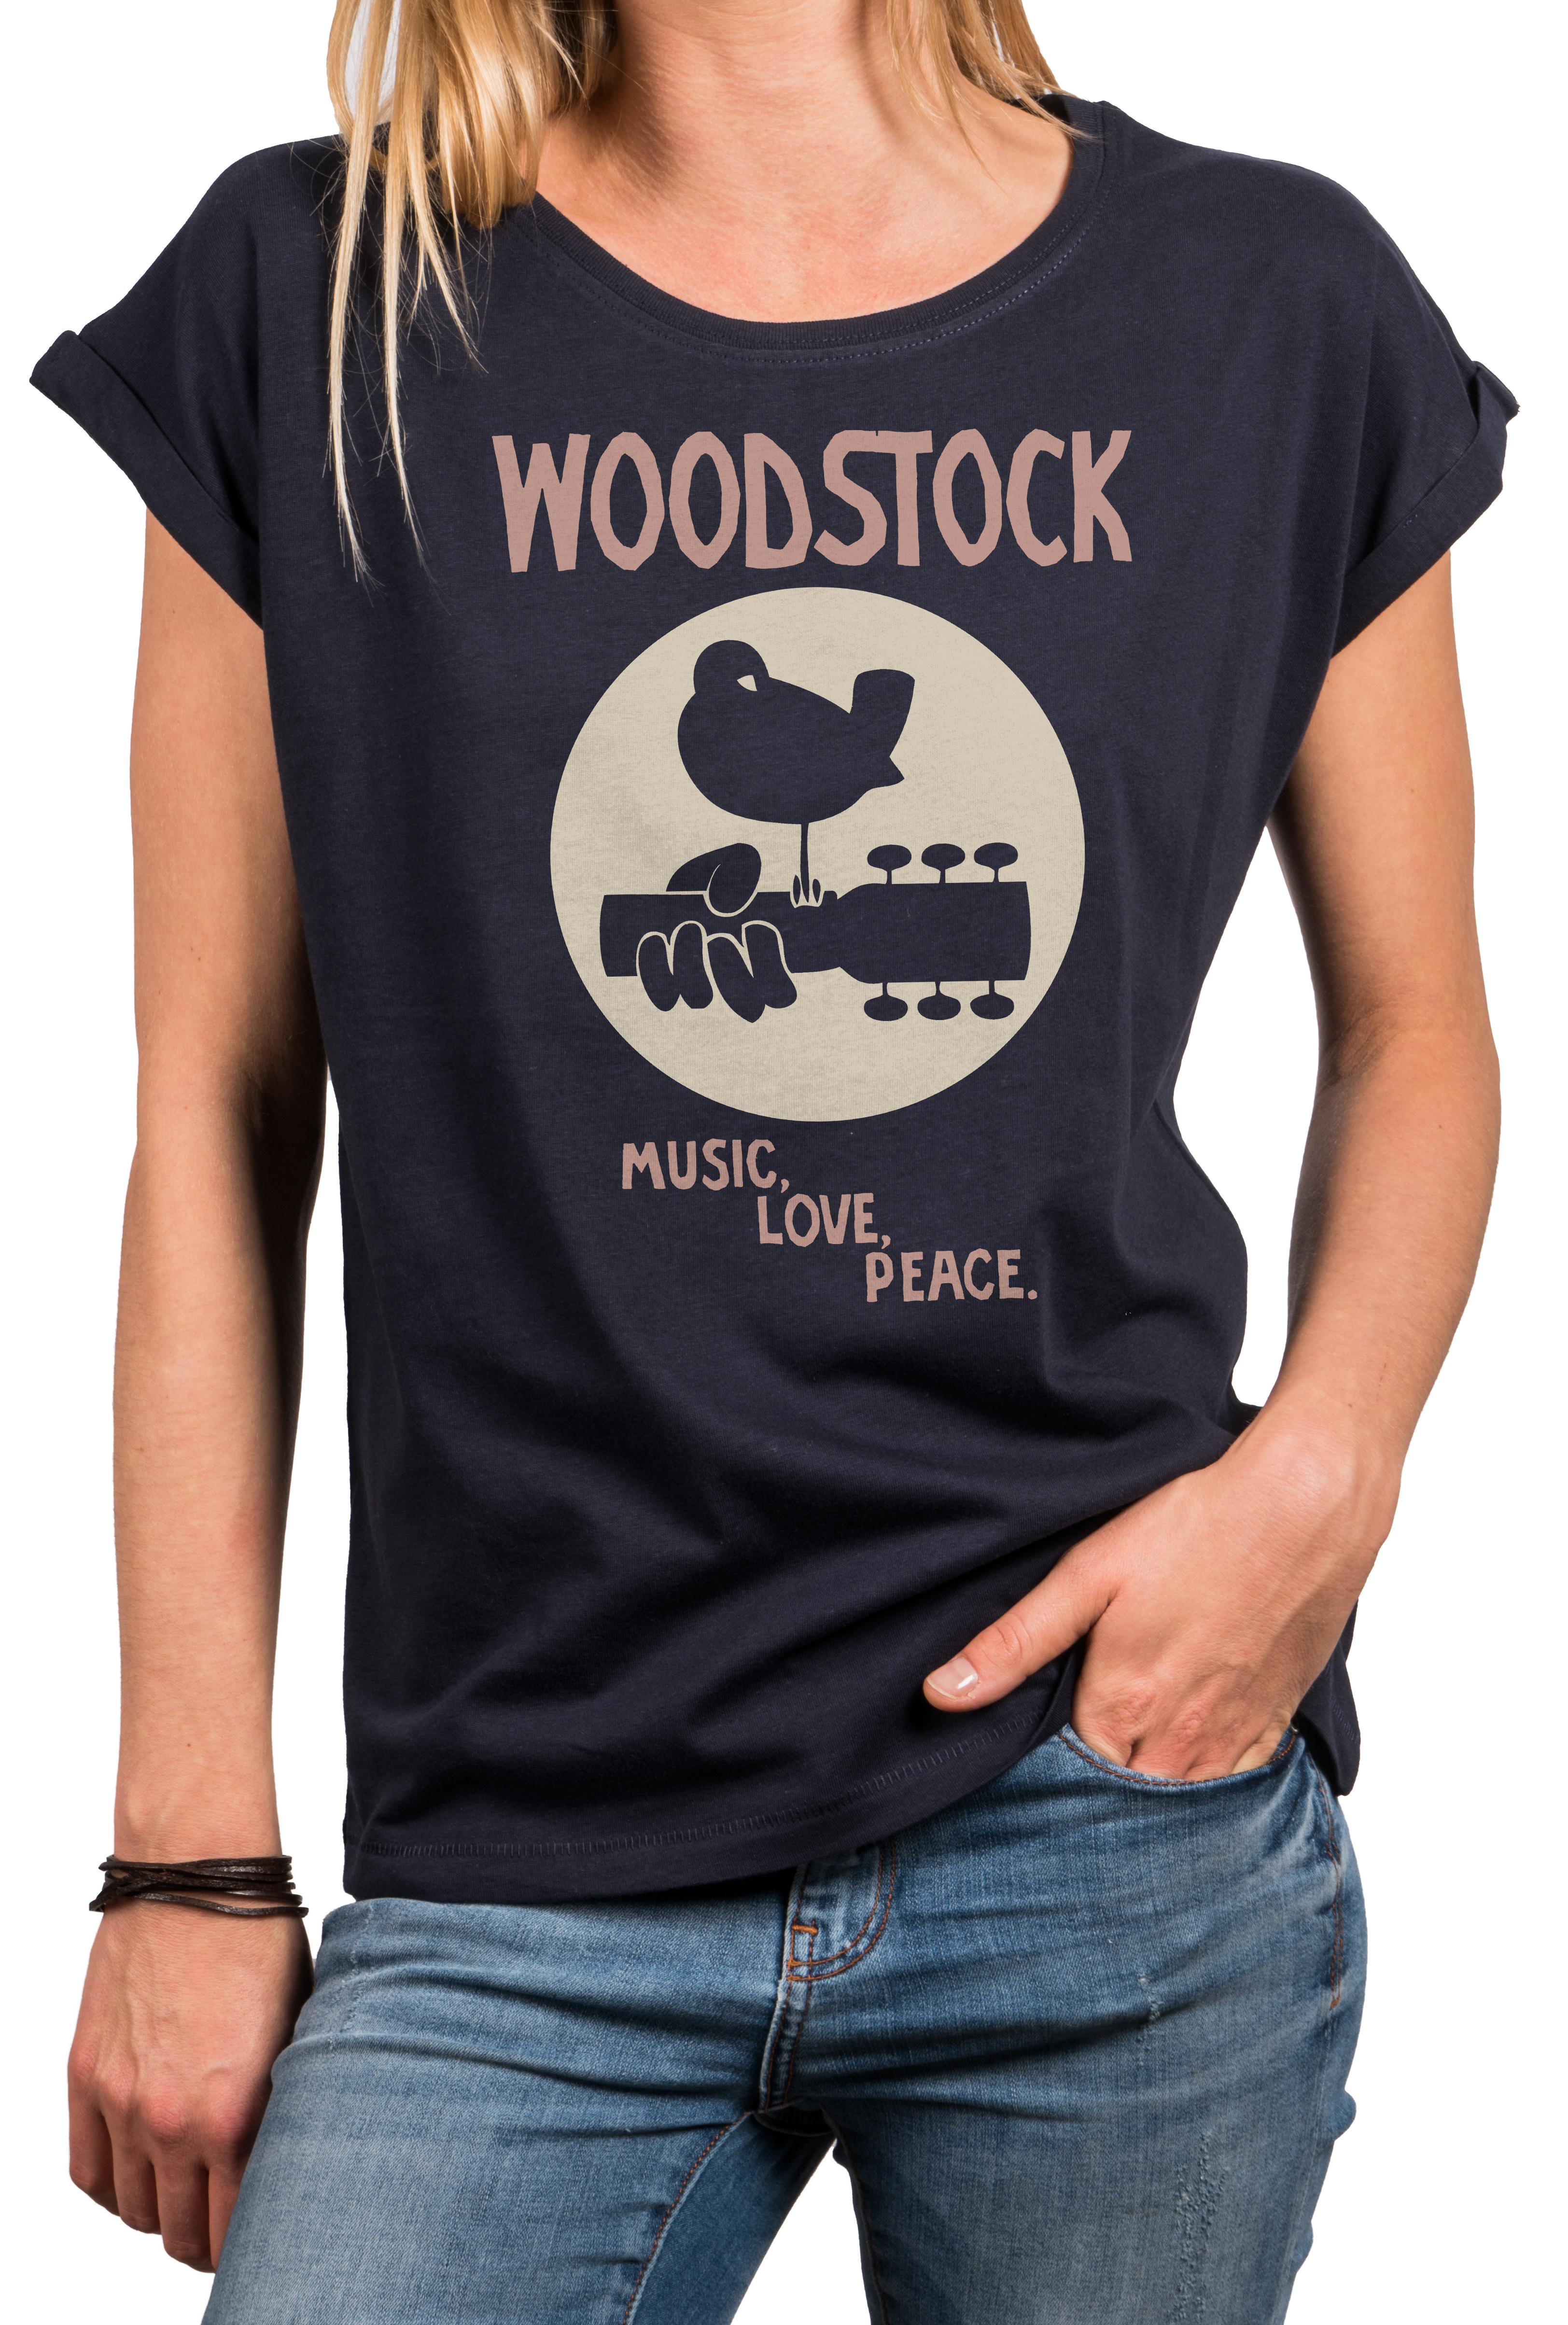 Vintage Hippie Shirt Damen - Woodstock